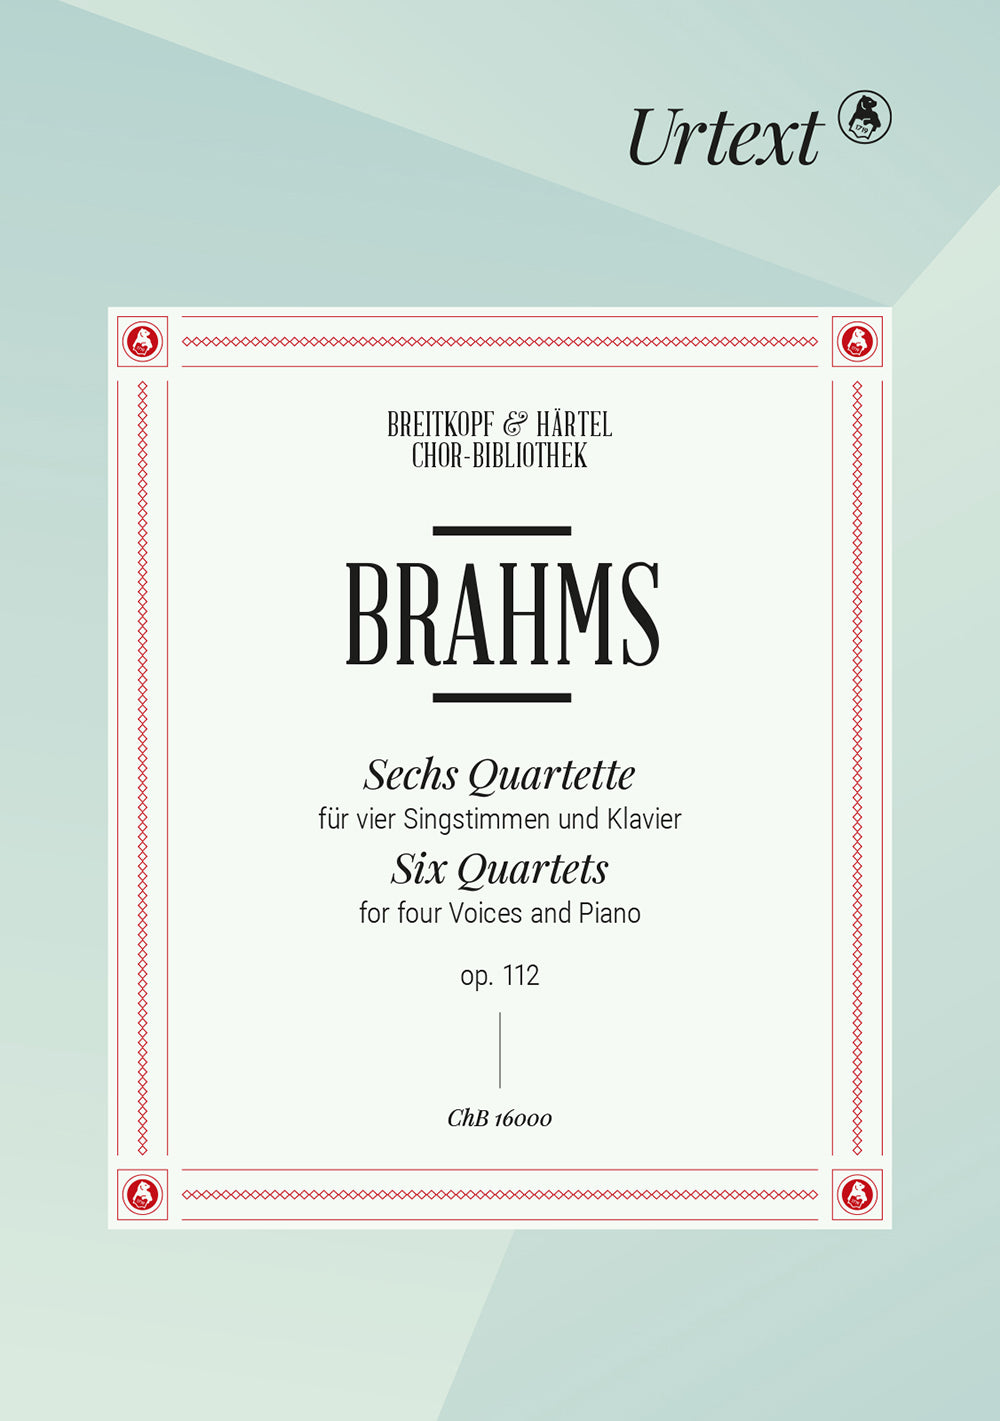 Brahms 6 Quartets for Four Voices and Piano op. 112